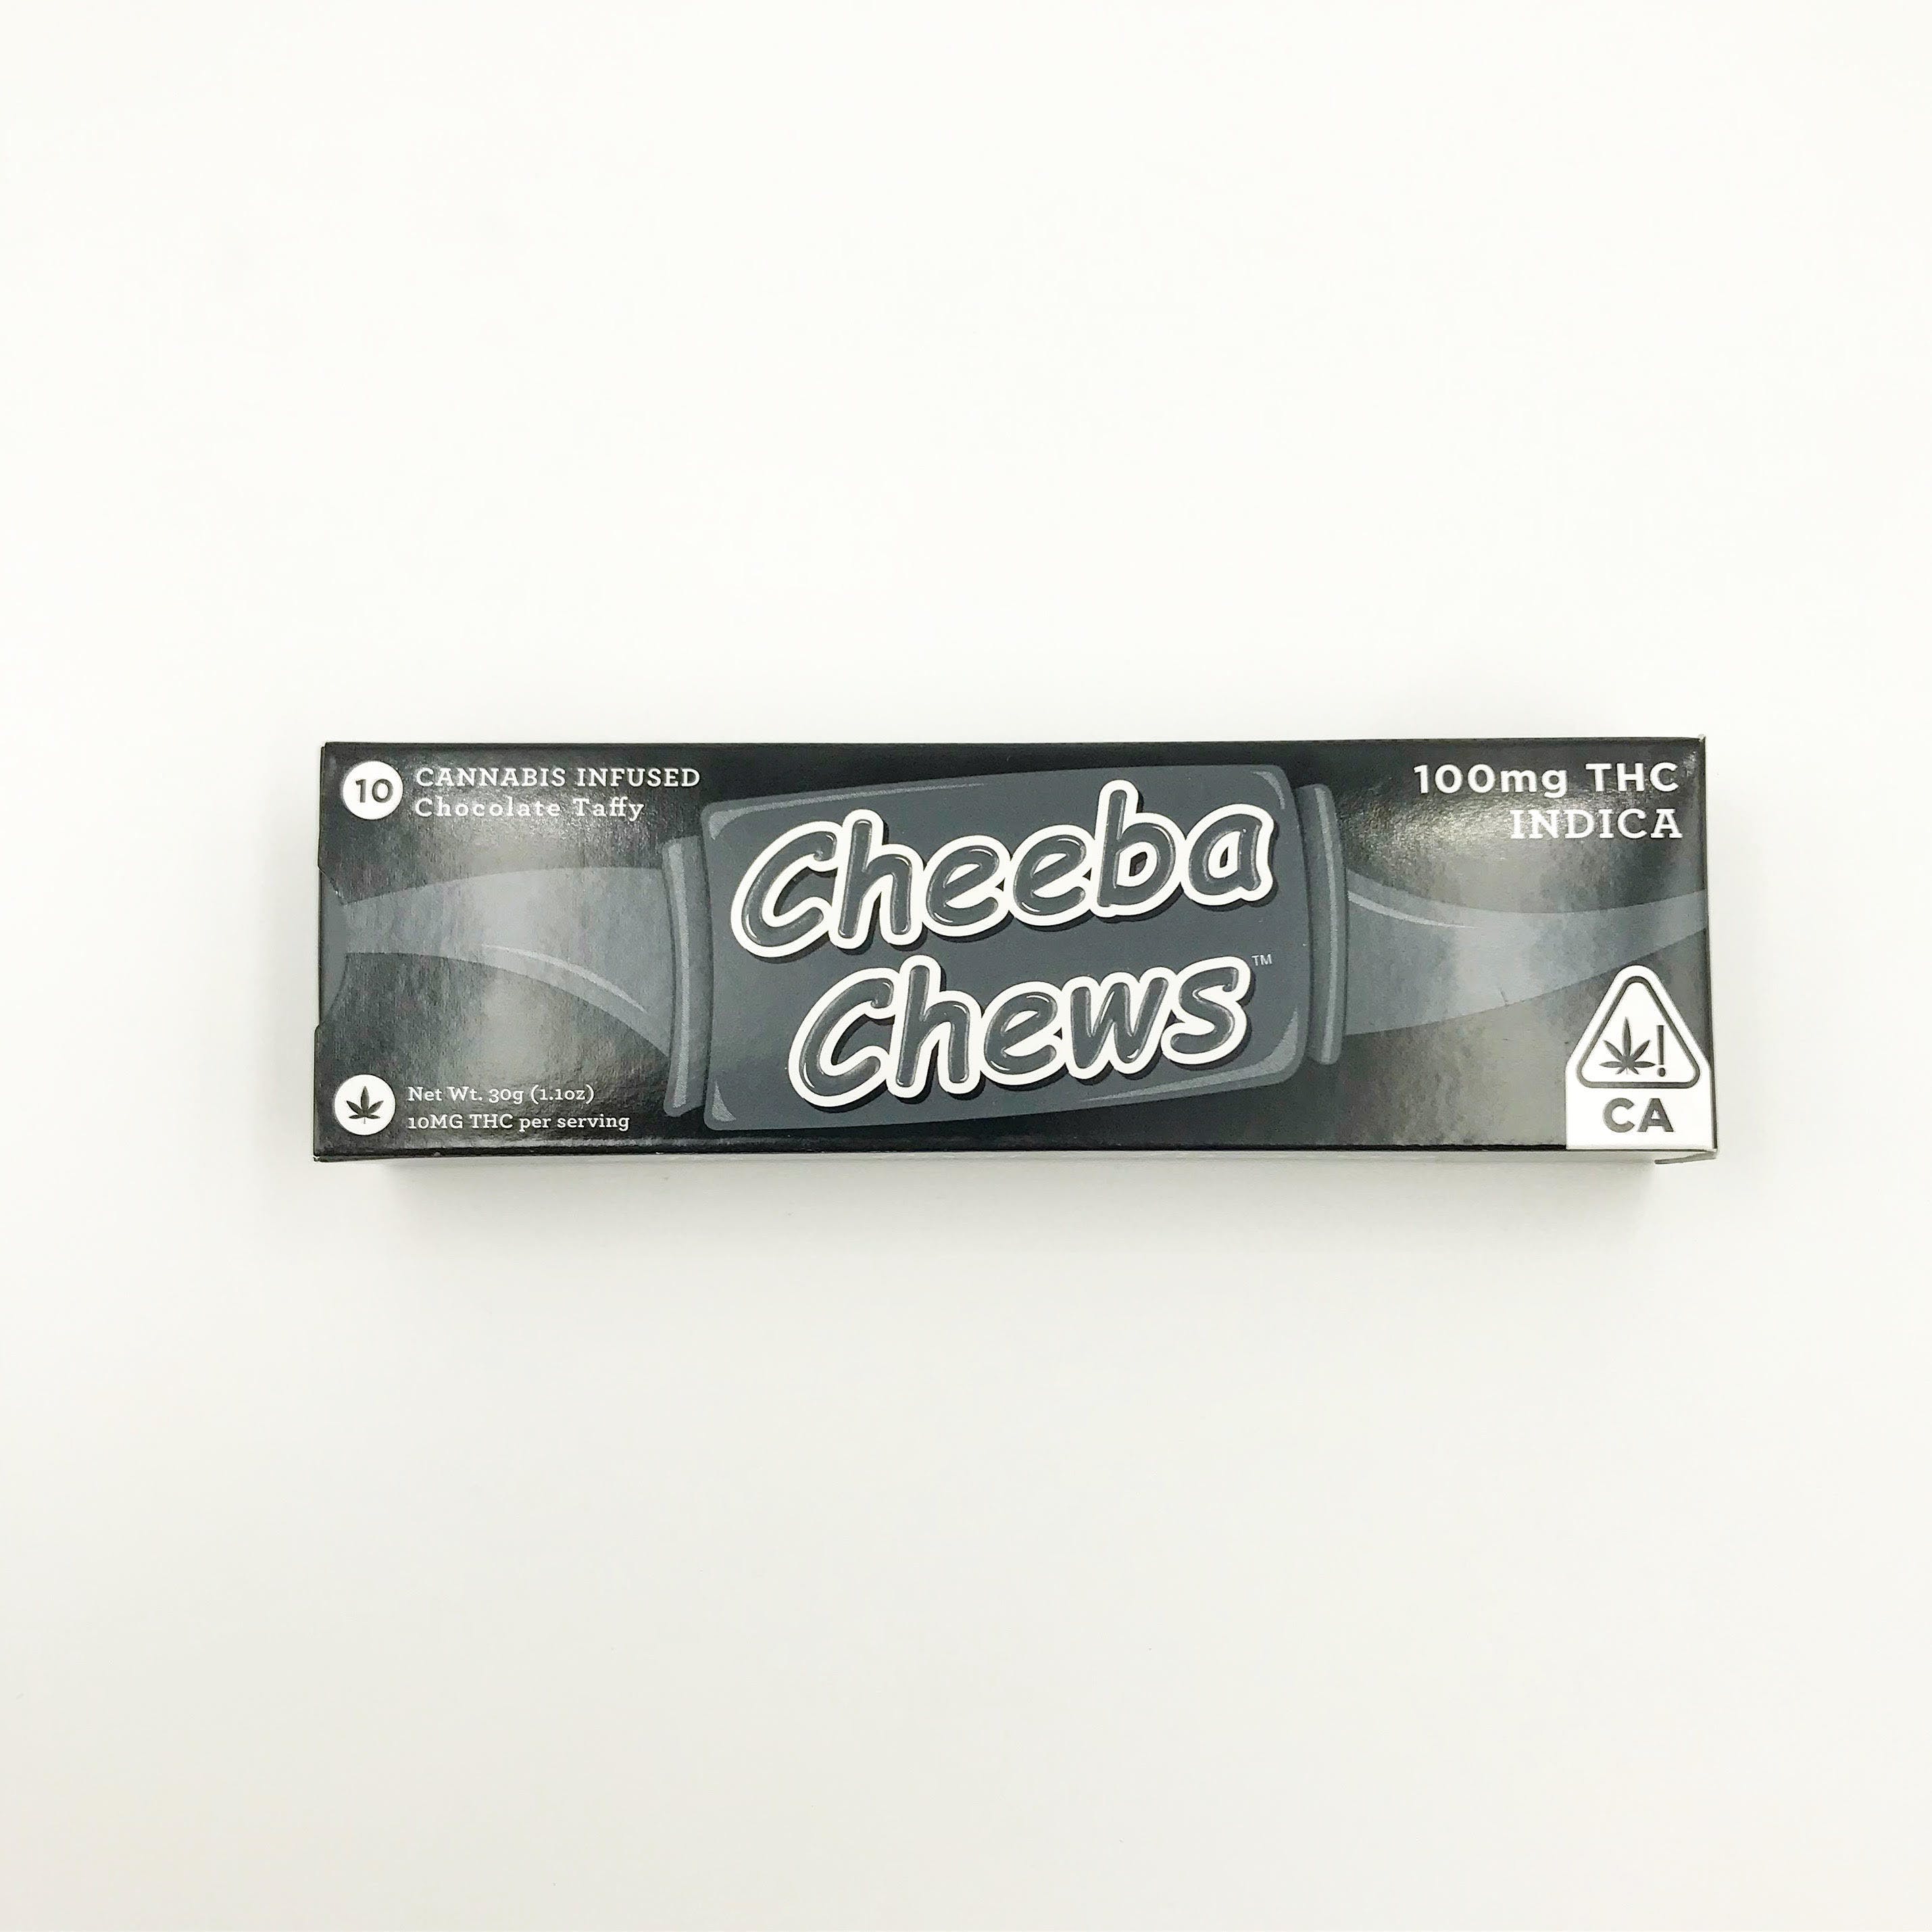 Cheeba Chews - Indica Chocolate Taffy, 100mg